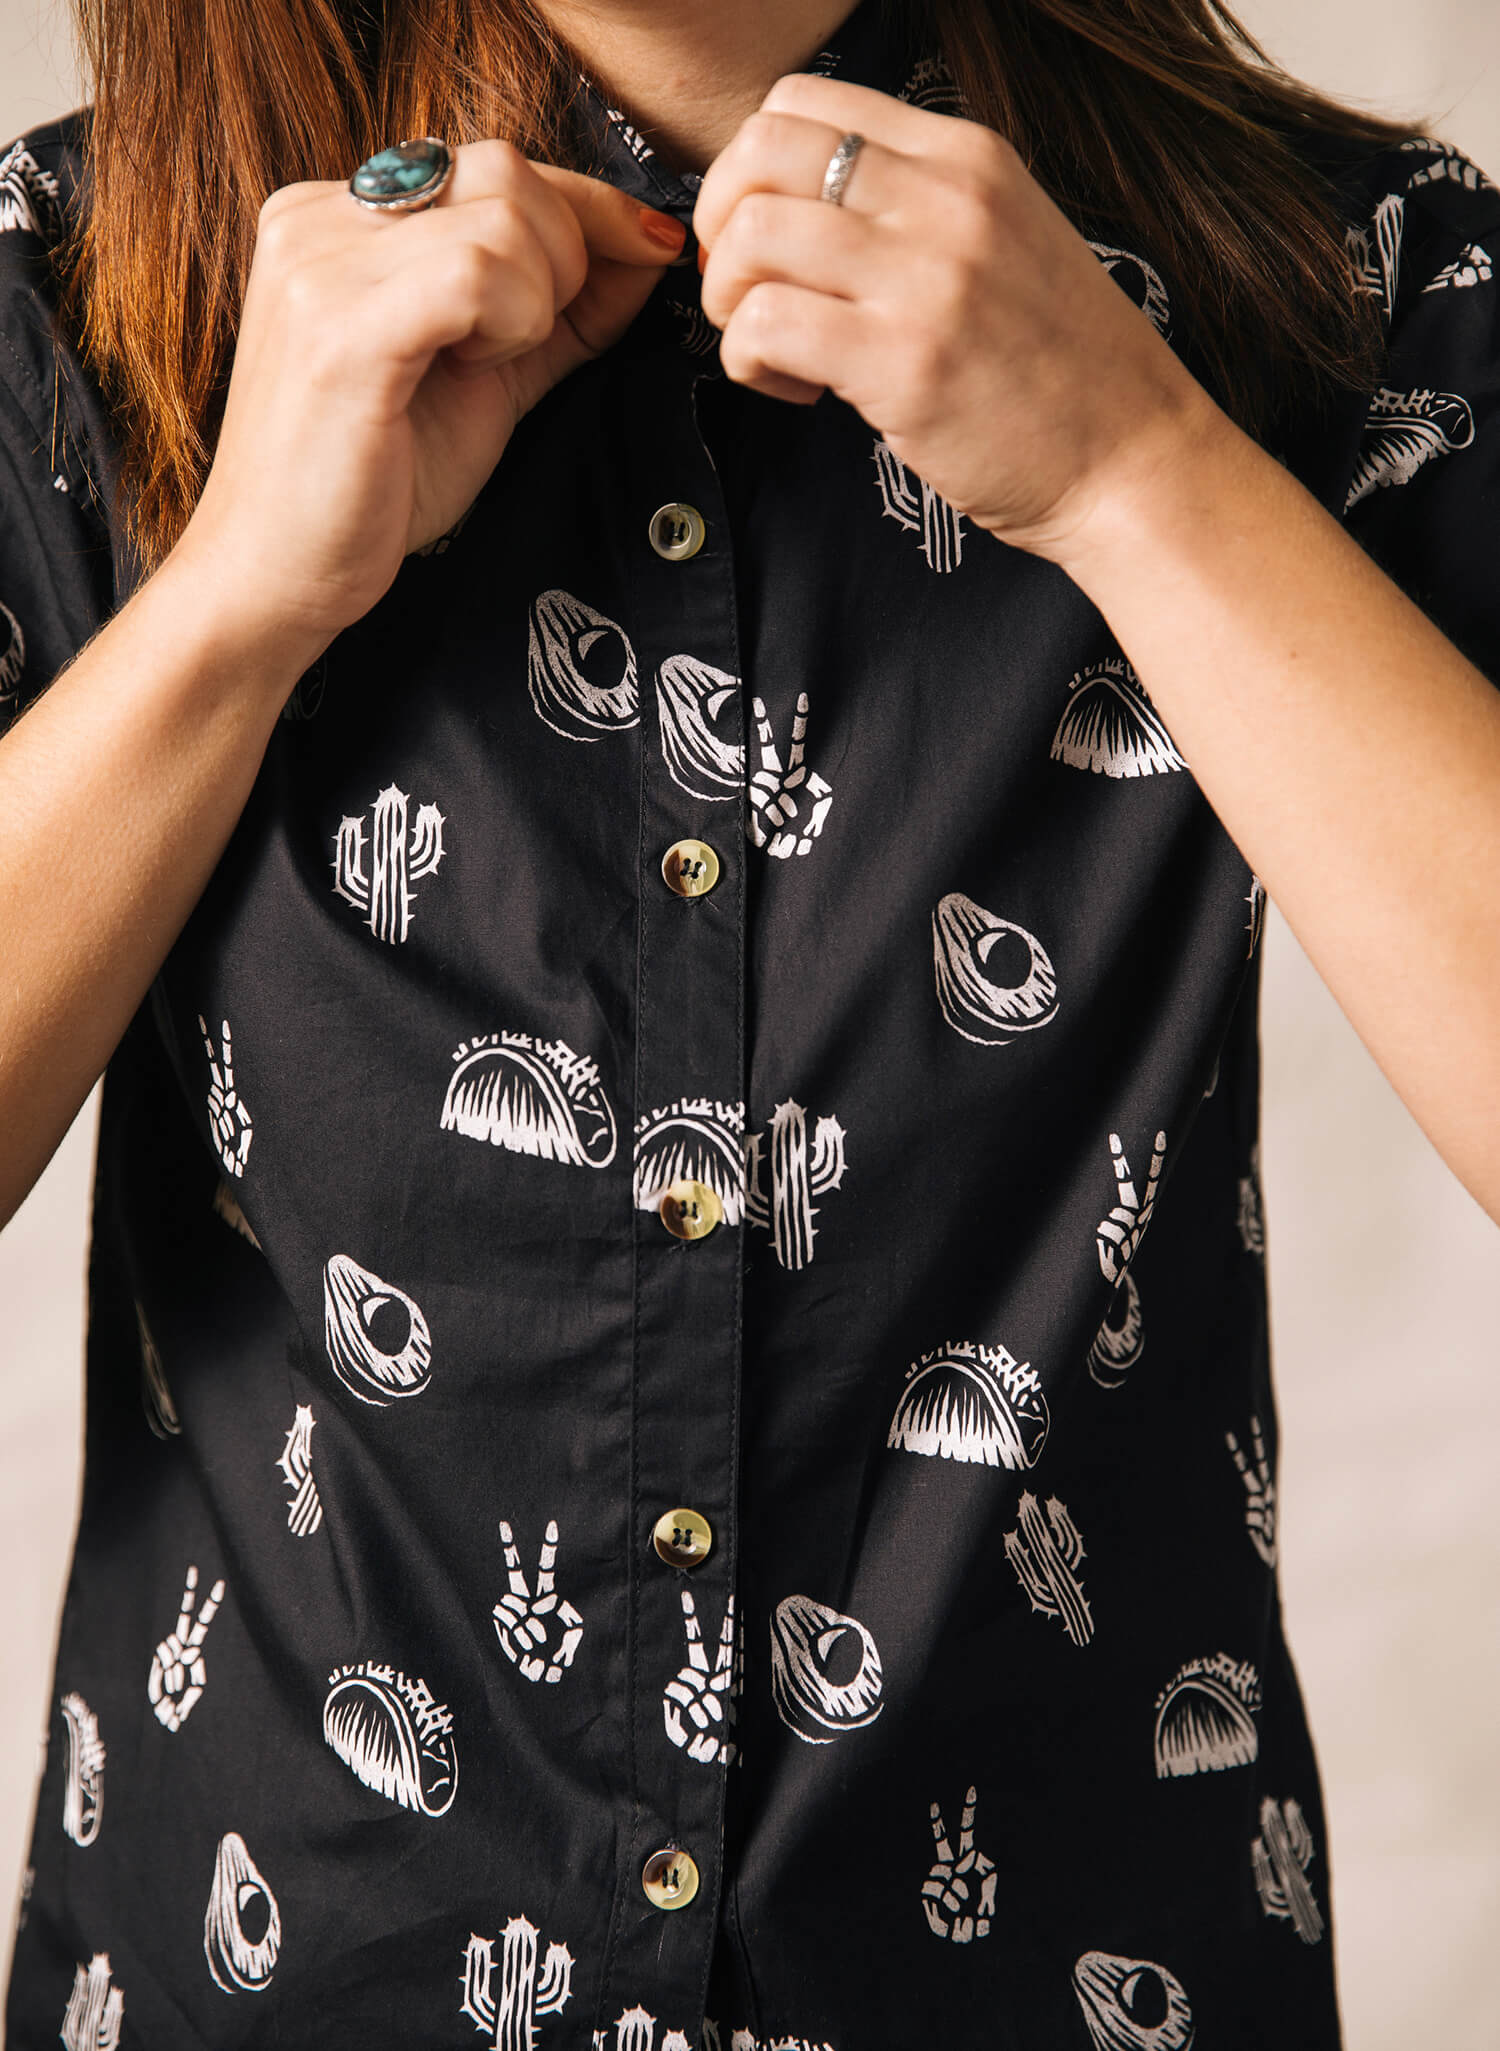 No Problemo Women’s Button-Up Top. Taco Shirt. 100% Cotton | Pyknic L